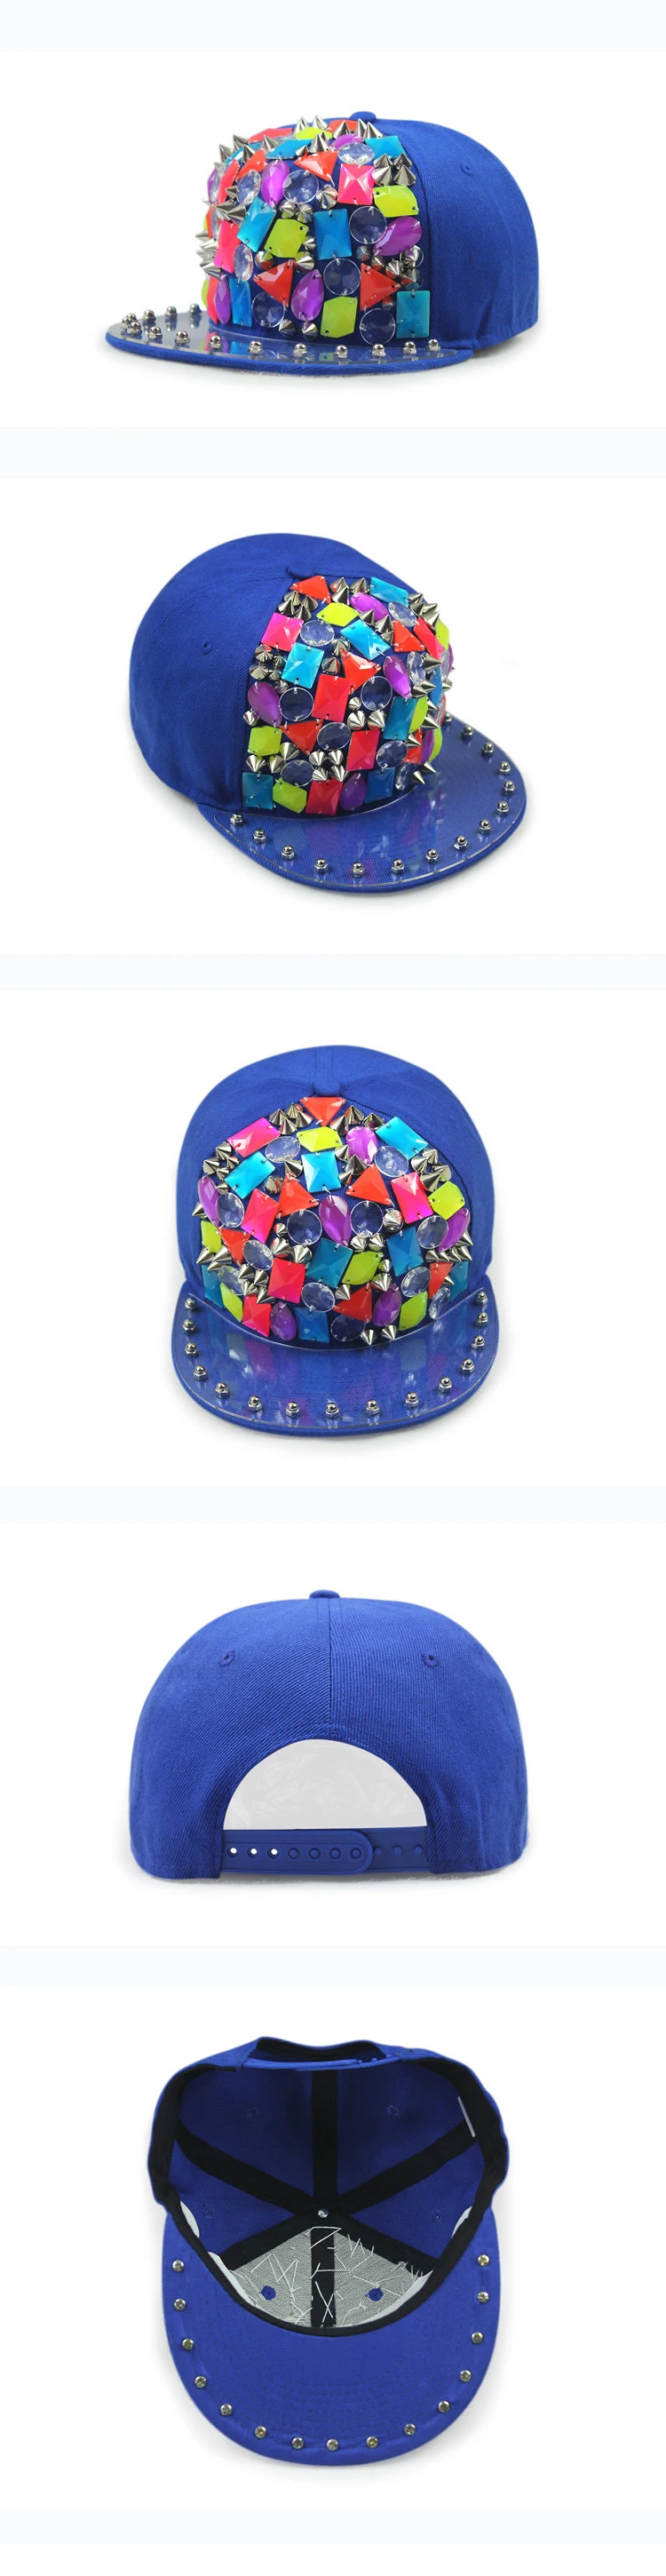 GBCNYIER открытый Паркур спортивная шапка крутая мода унисекс заклепки шляпа от солнца хип-хоп Уличная мода для отдыха шляпа